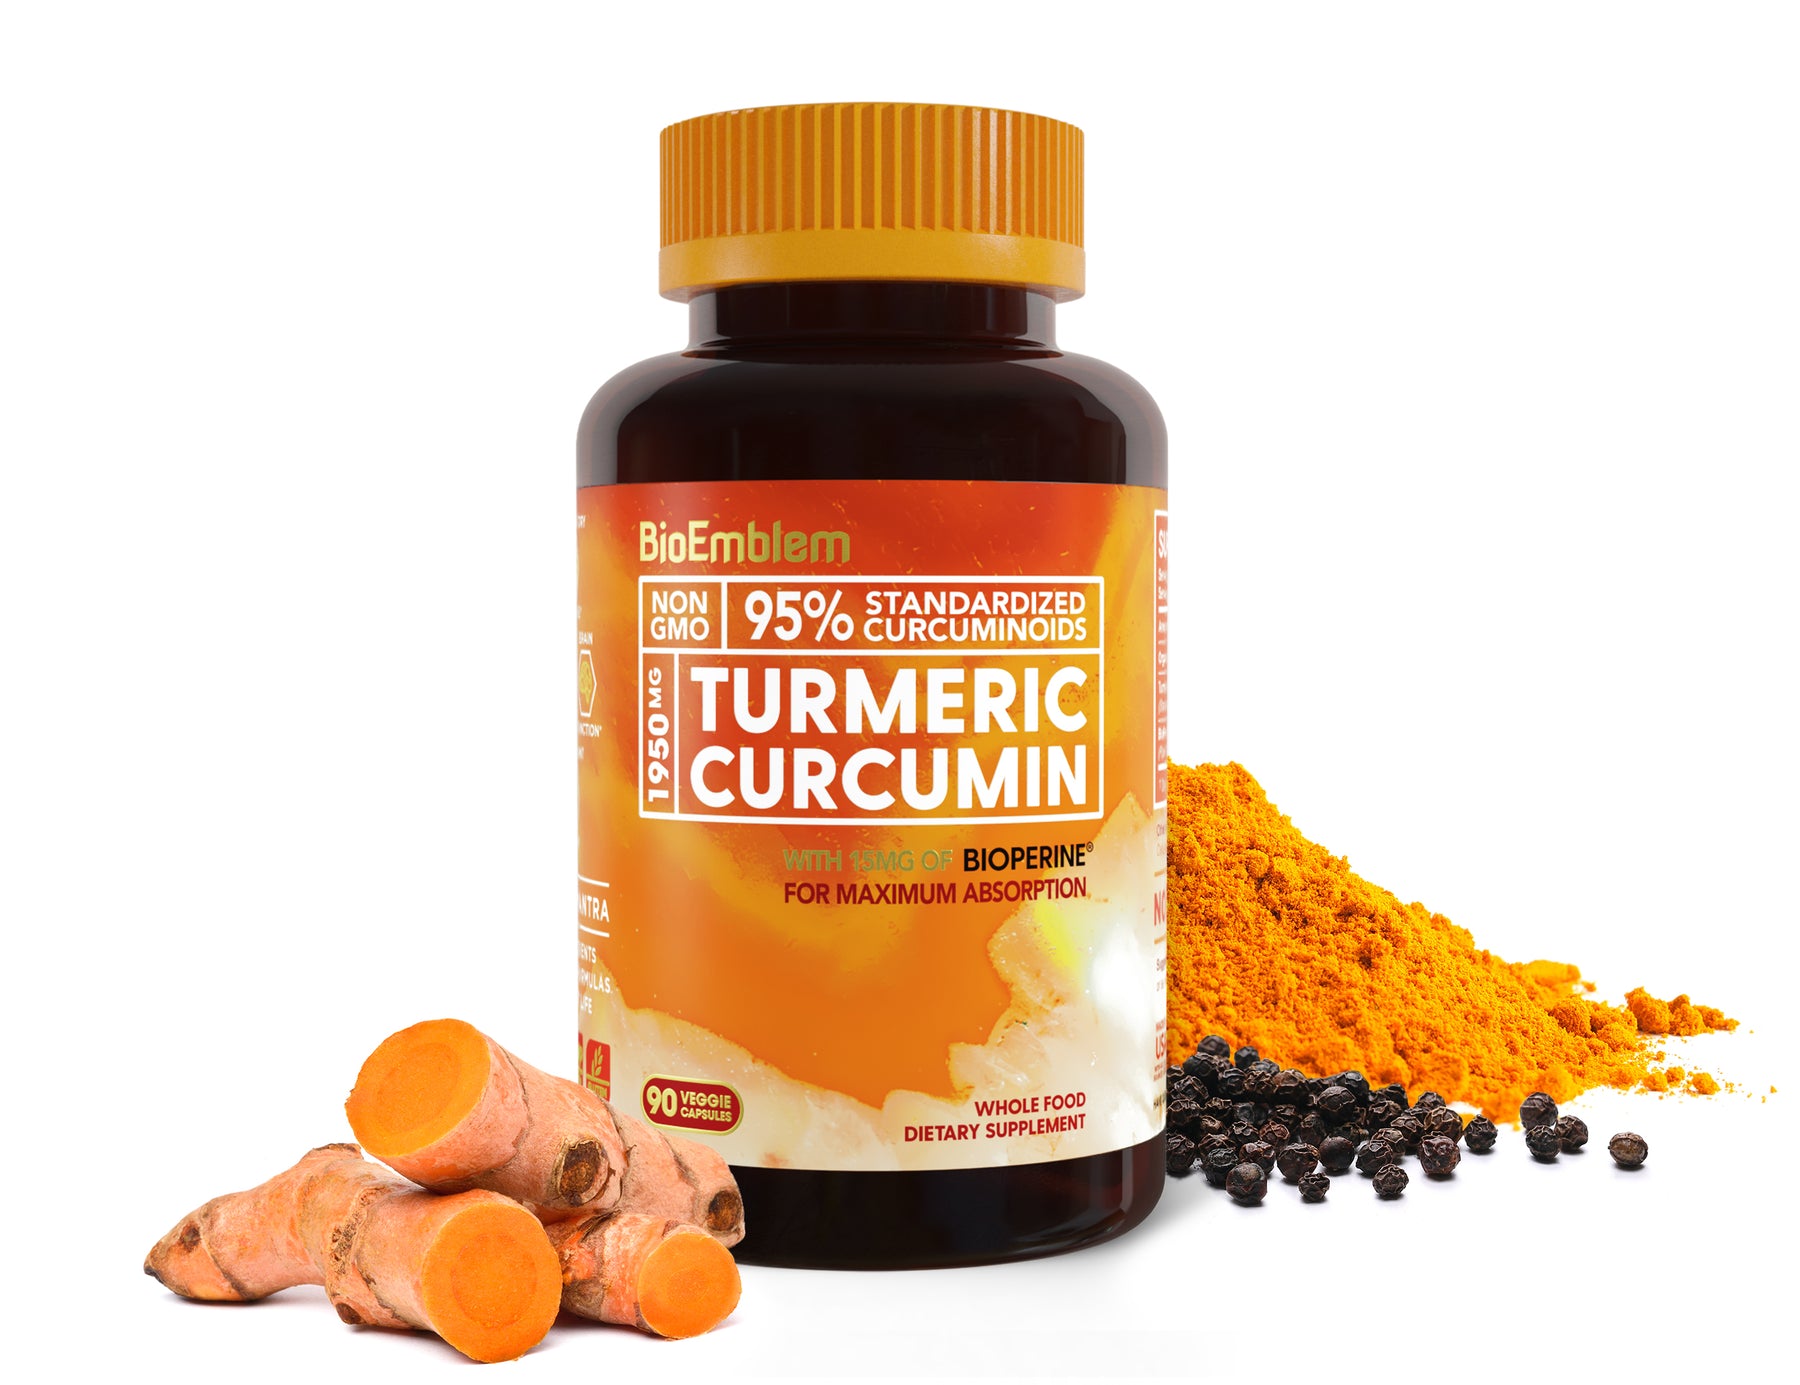 BioEmblem Turmeric Curcumin Supplement with BioPerine